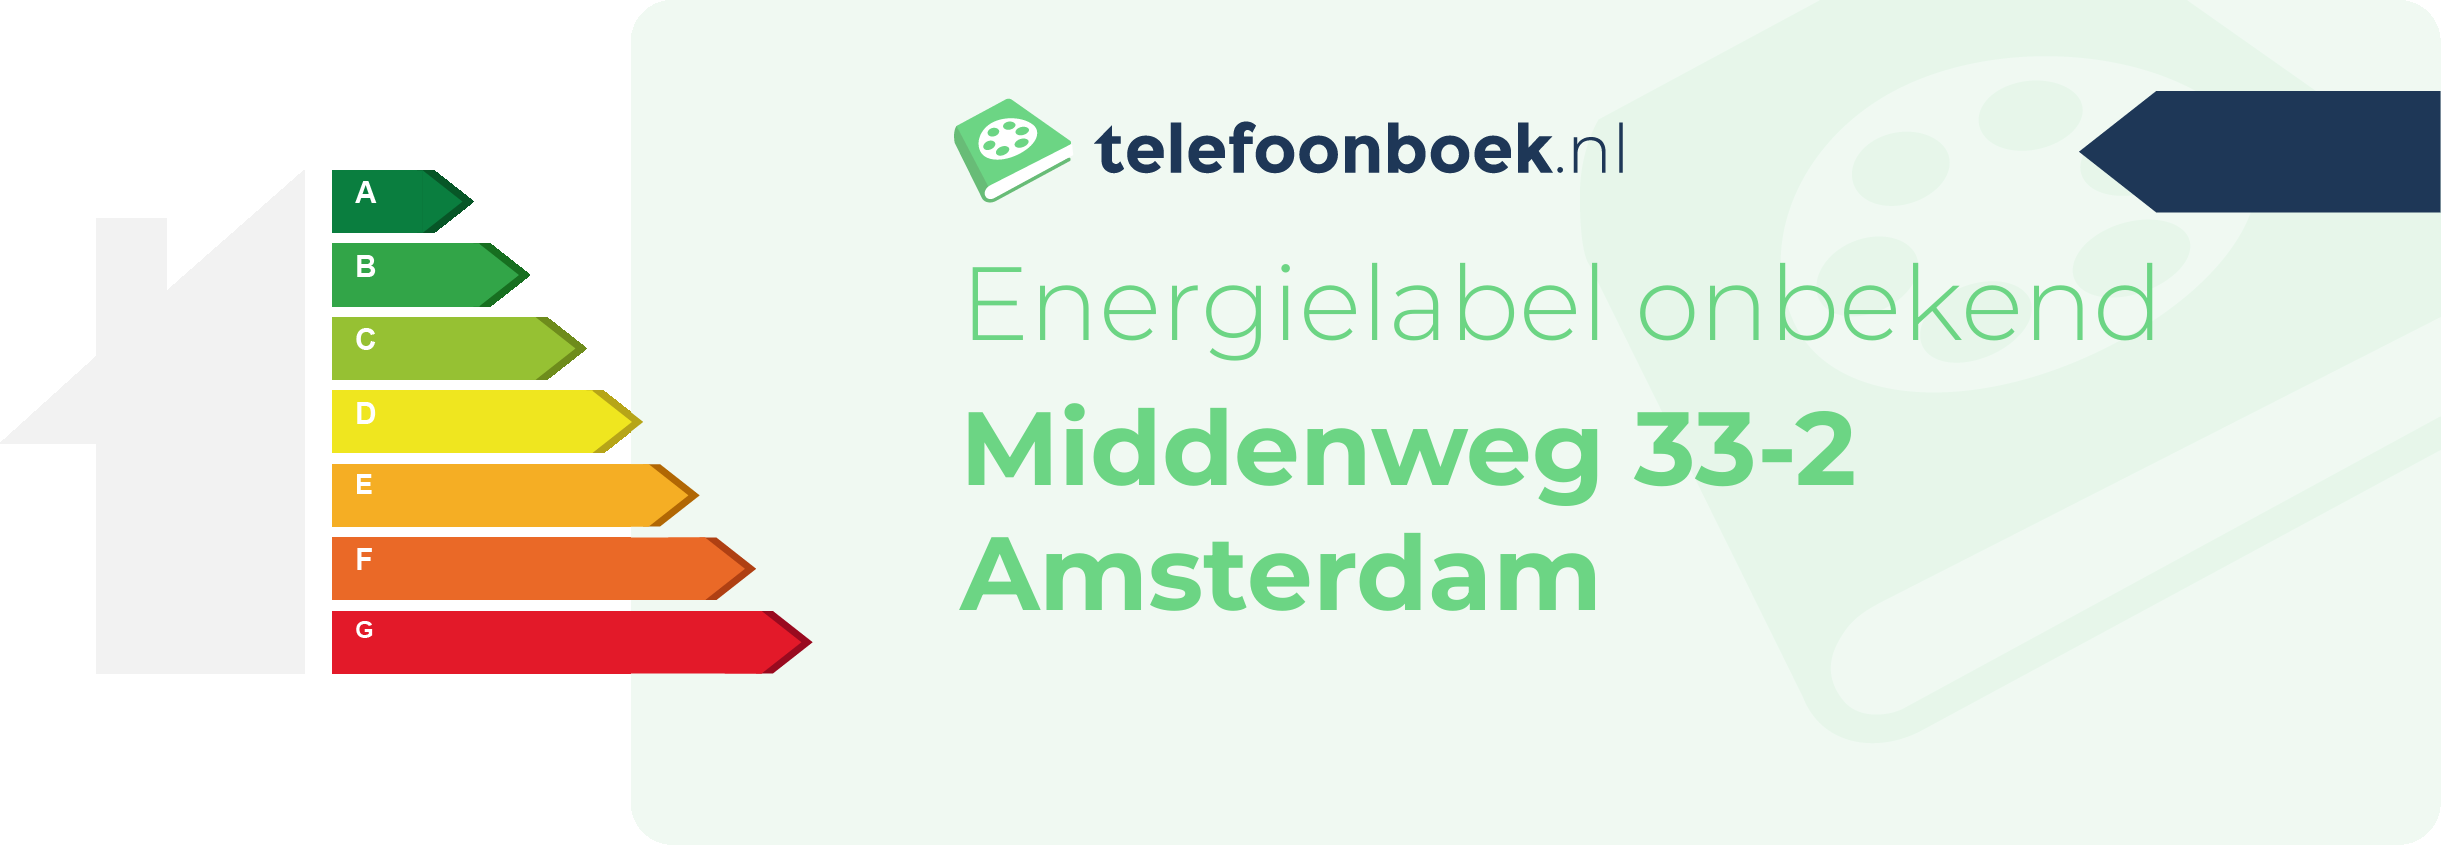 Energielabel Middenweg 33-2 Amsterdam